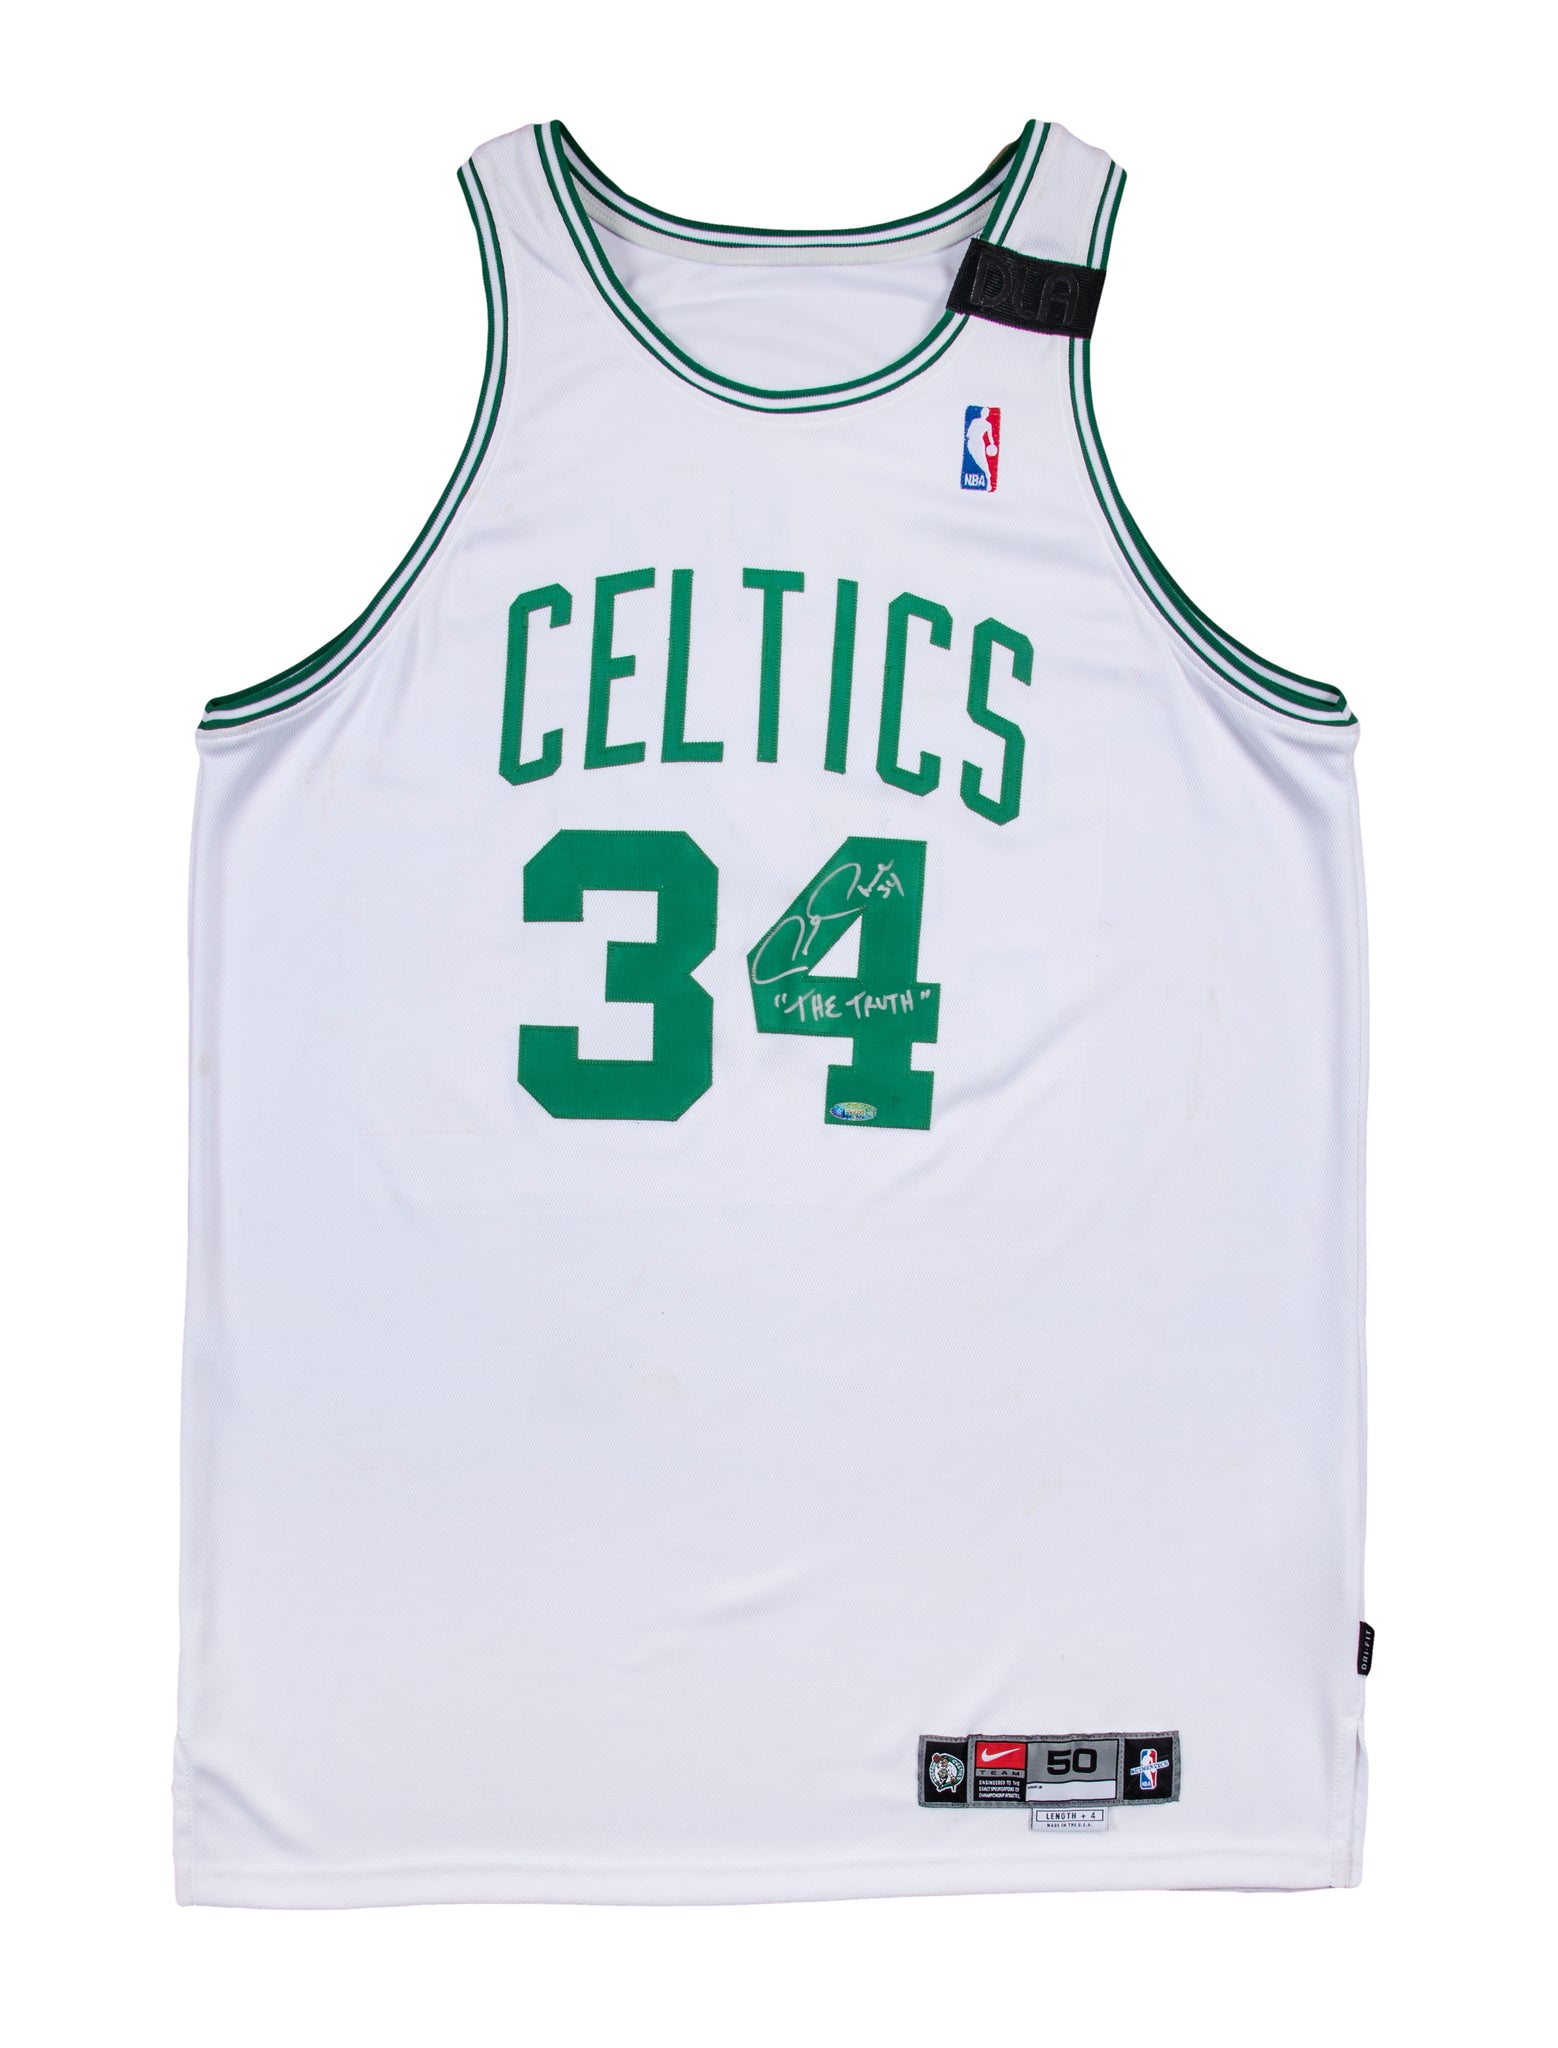 Boston Celtics Signed Jerseys, Collectible Celtics Jerseys